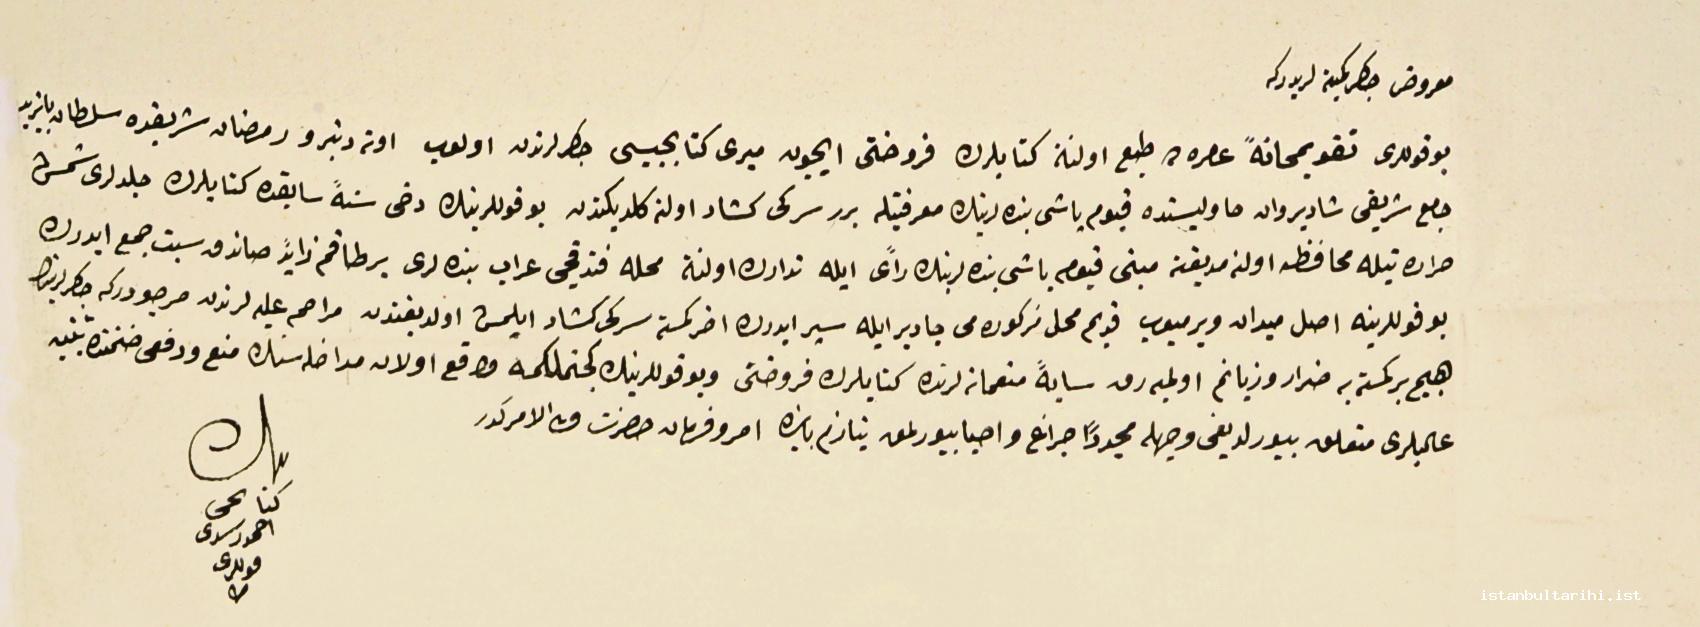 3- Sahaf Ahmed Efendi’nin Beyazıt Camii avlusunda kitap sergisi açma talebine dair 18 Ağustos 1848 tarihli arzuhali (BOA, A.MKT, nr. 144/38)